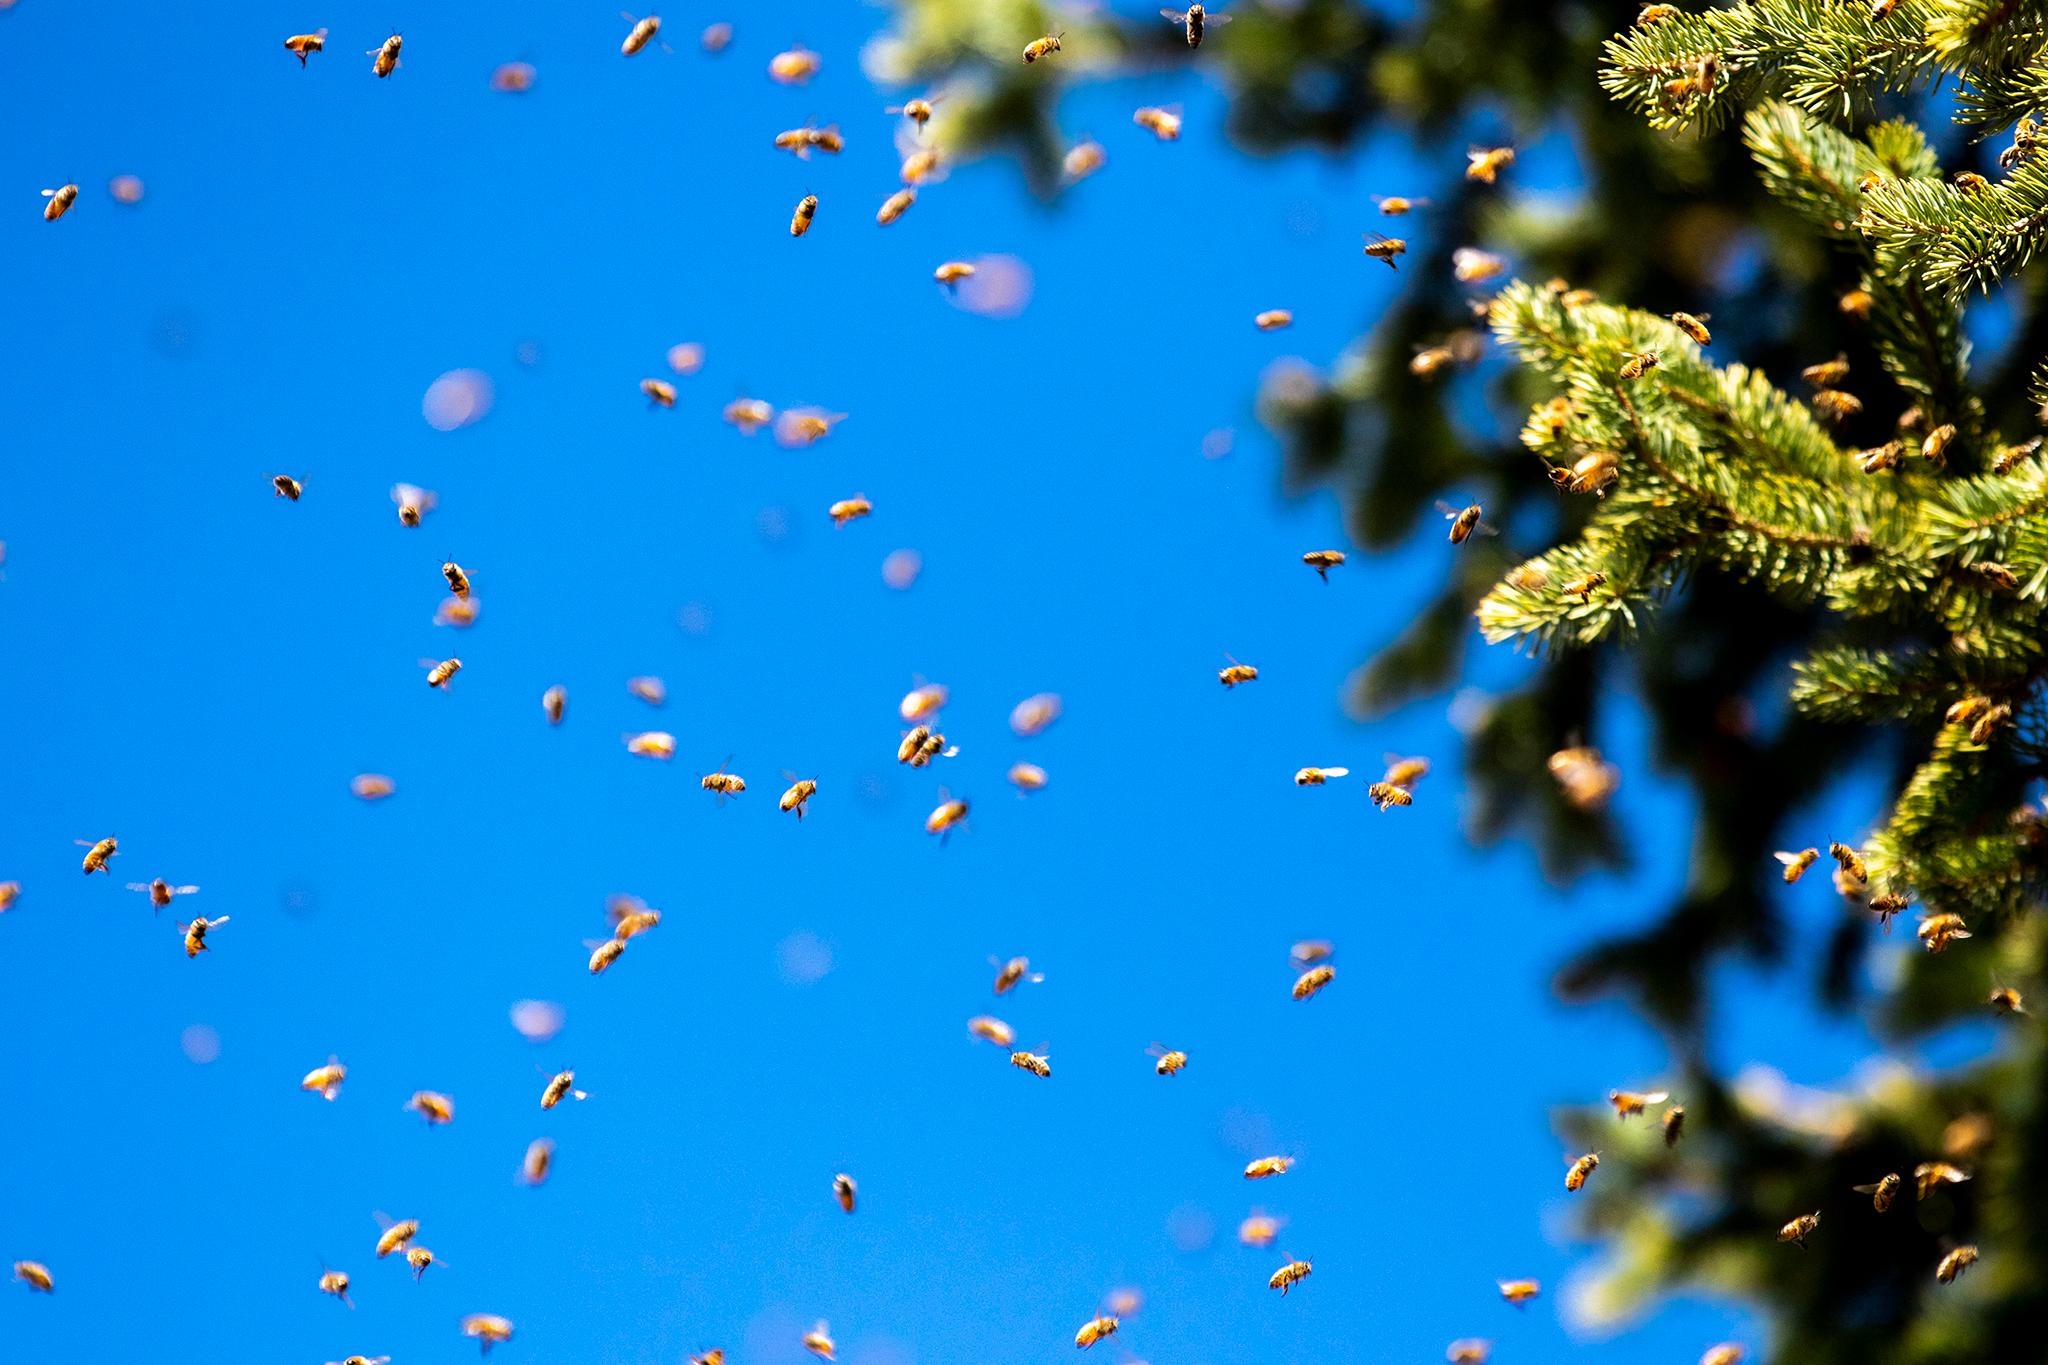 A bee swarm in Platt Park. April 29, 2021.